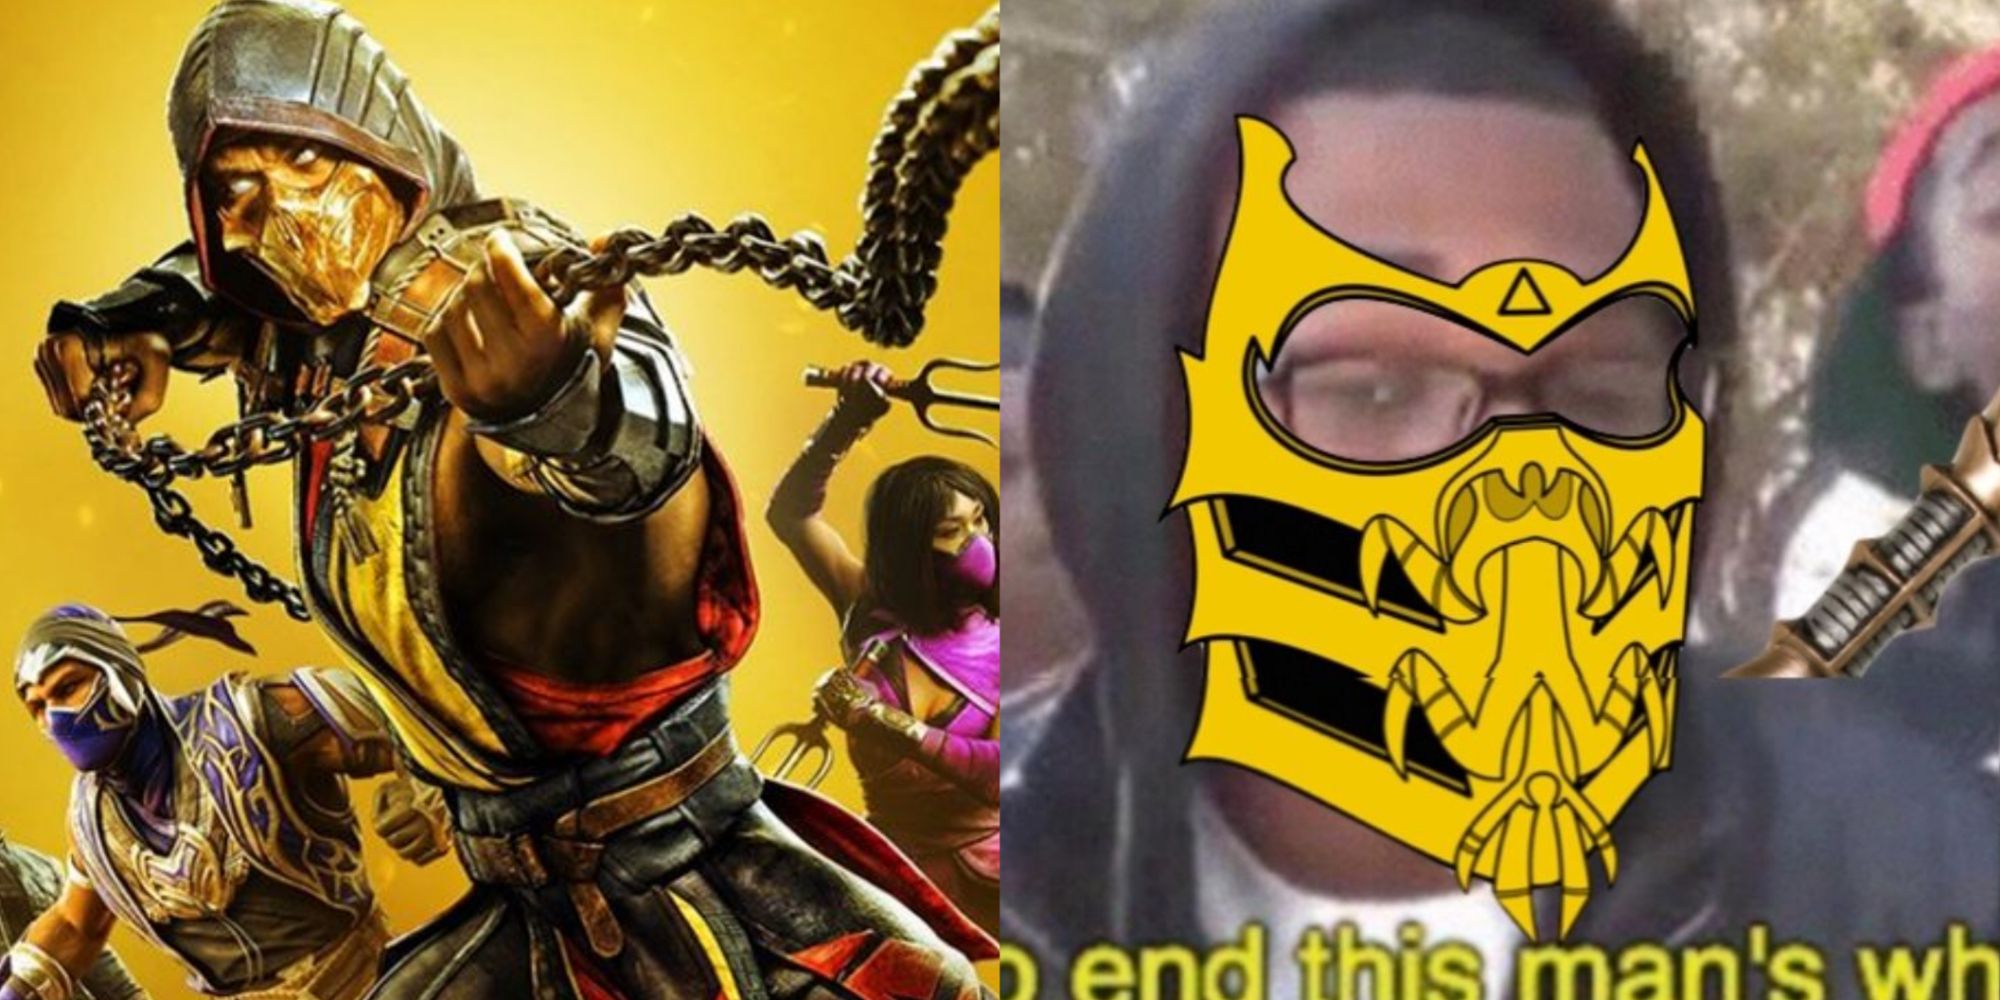 A split image of Mortal Kombat Scorpion and a meme